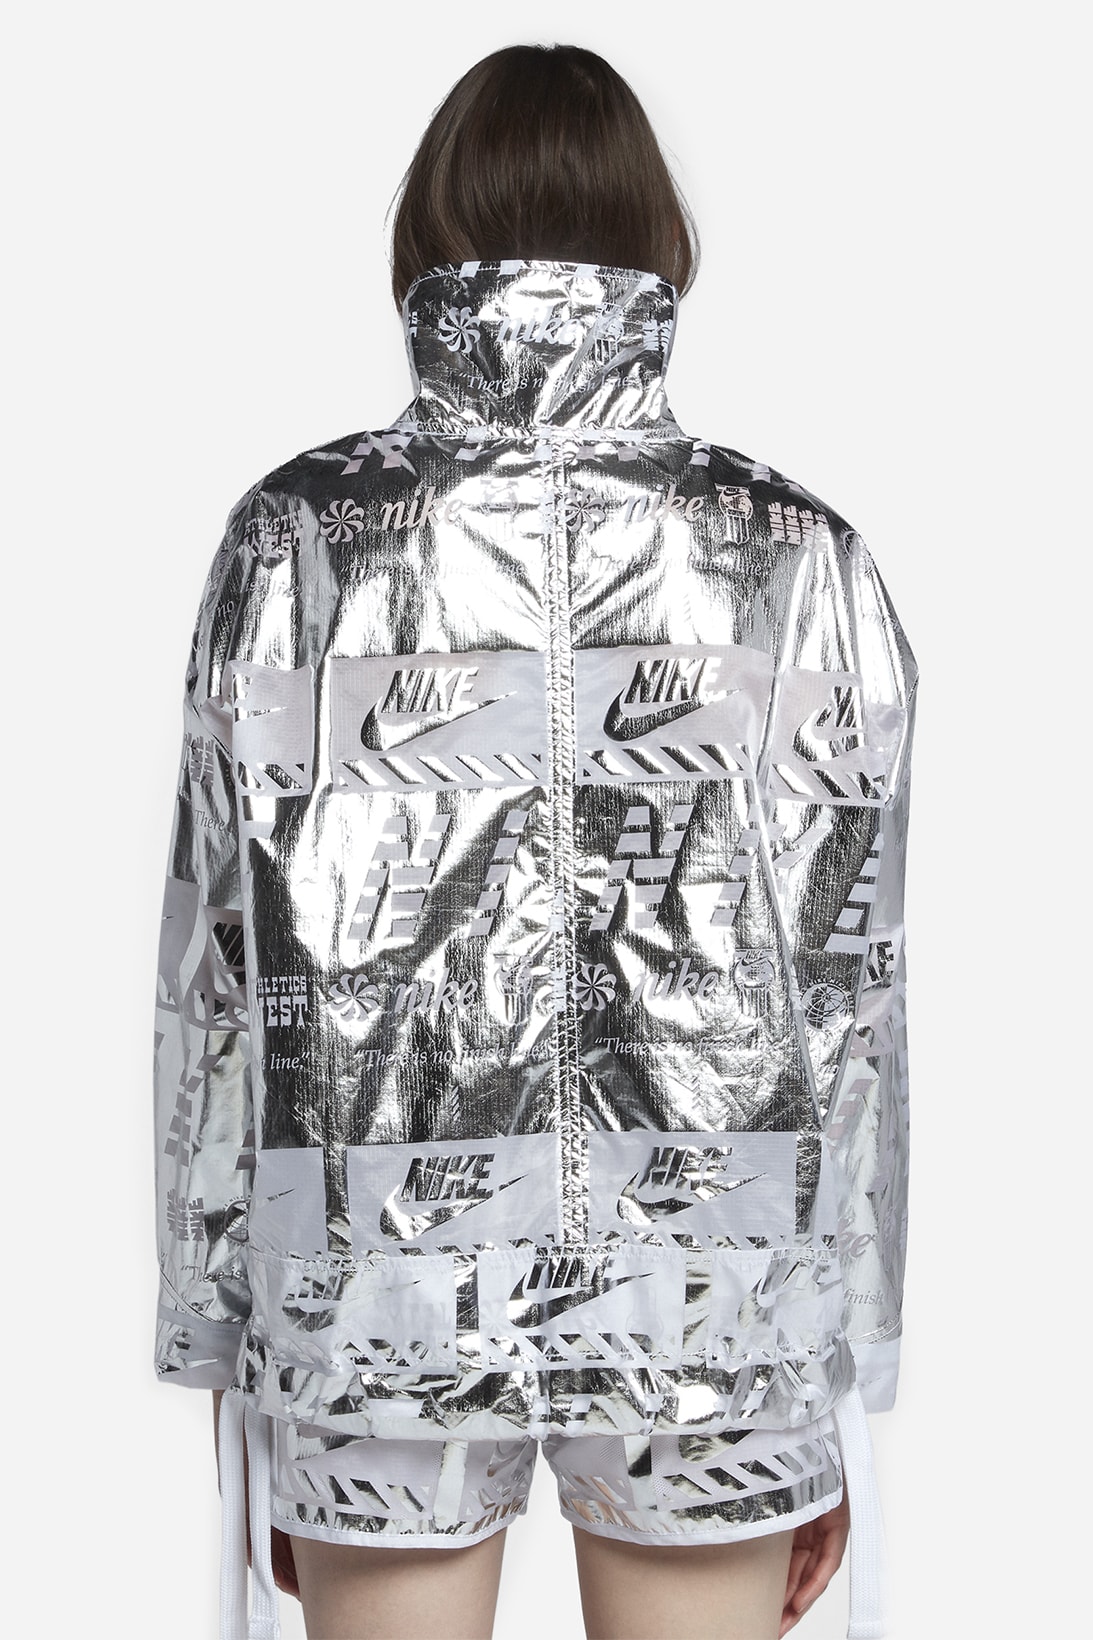 Nike womens jacket Metallic silver reflective shiny graphic logo jacket half zip where to buy futuristic naked copenhagen